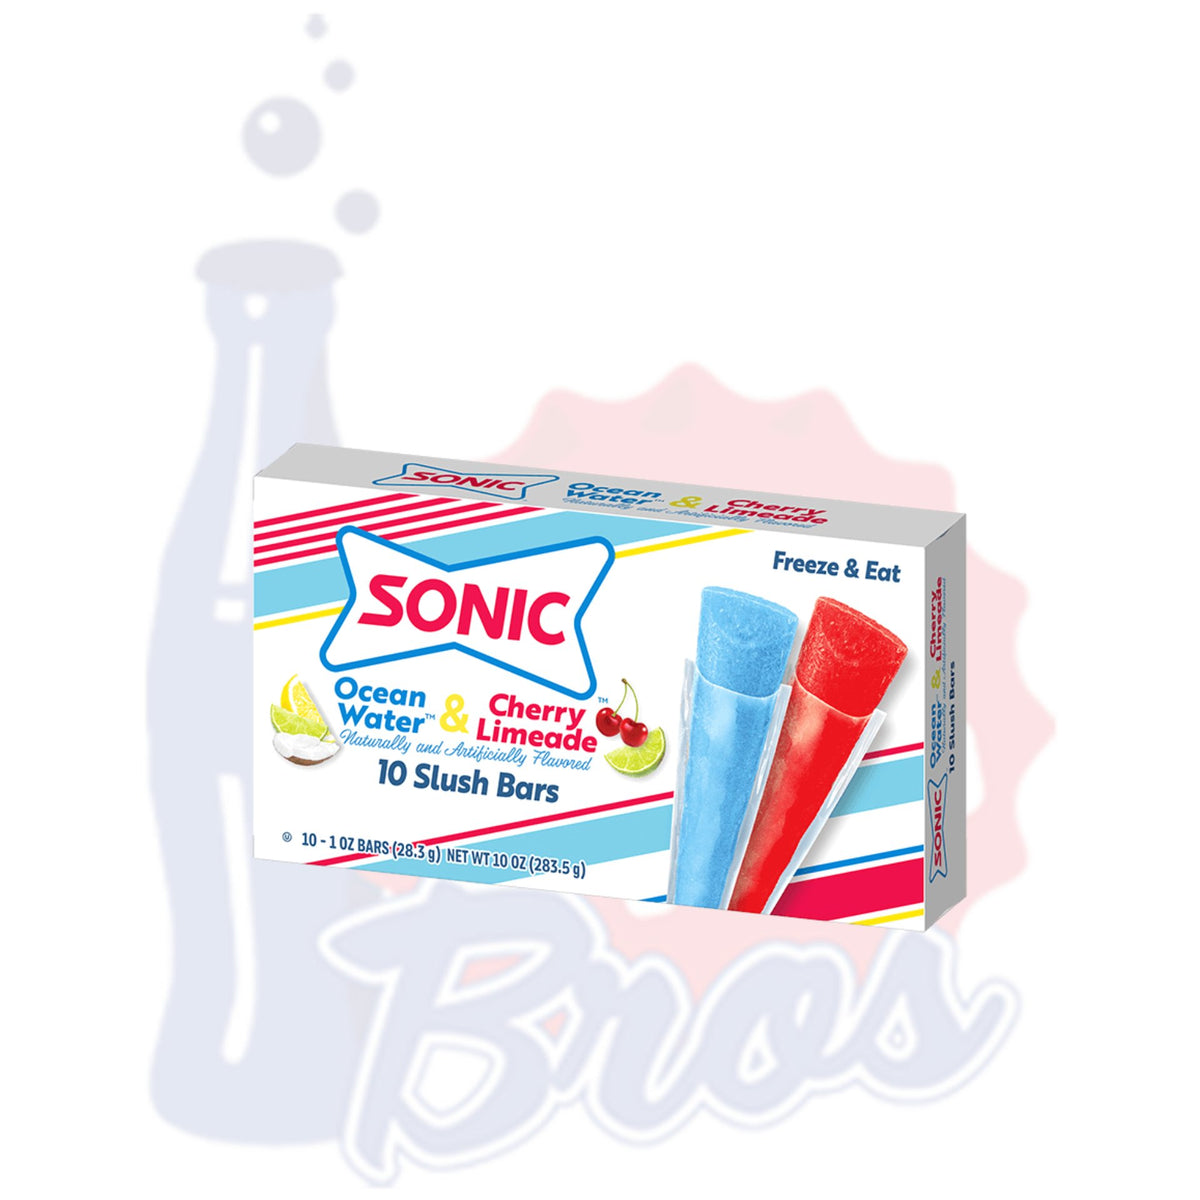 Sonic Ocean Water And Cherry Limeade Slush Bar 10ct Soda Pop Bros Cherry Limeade 2518